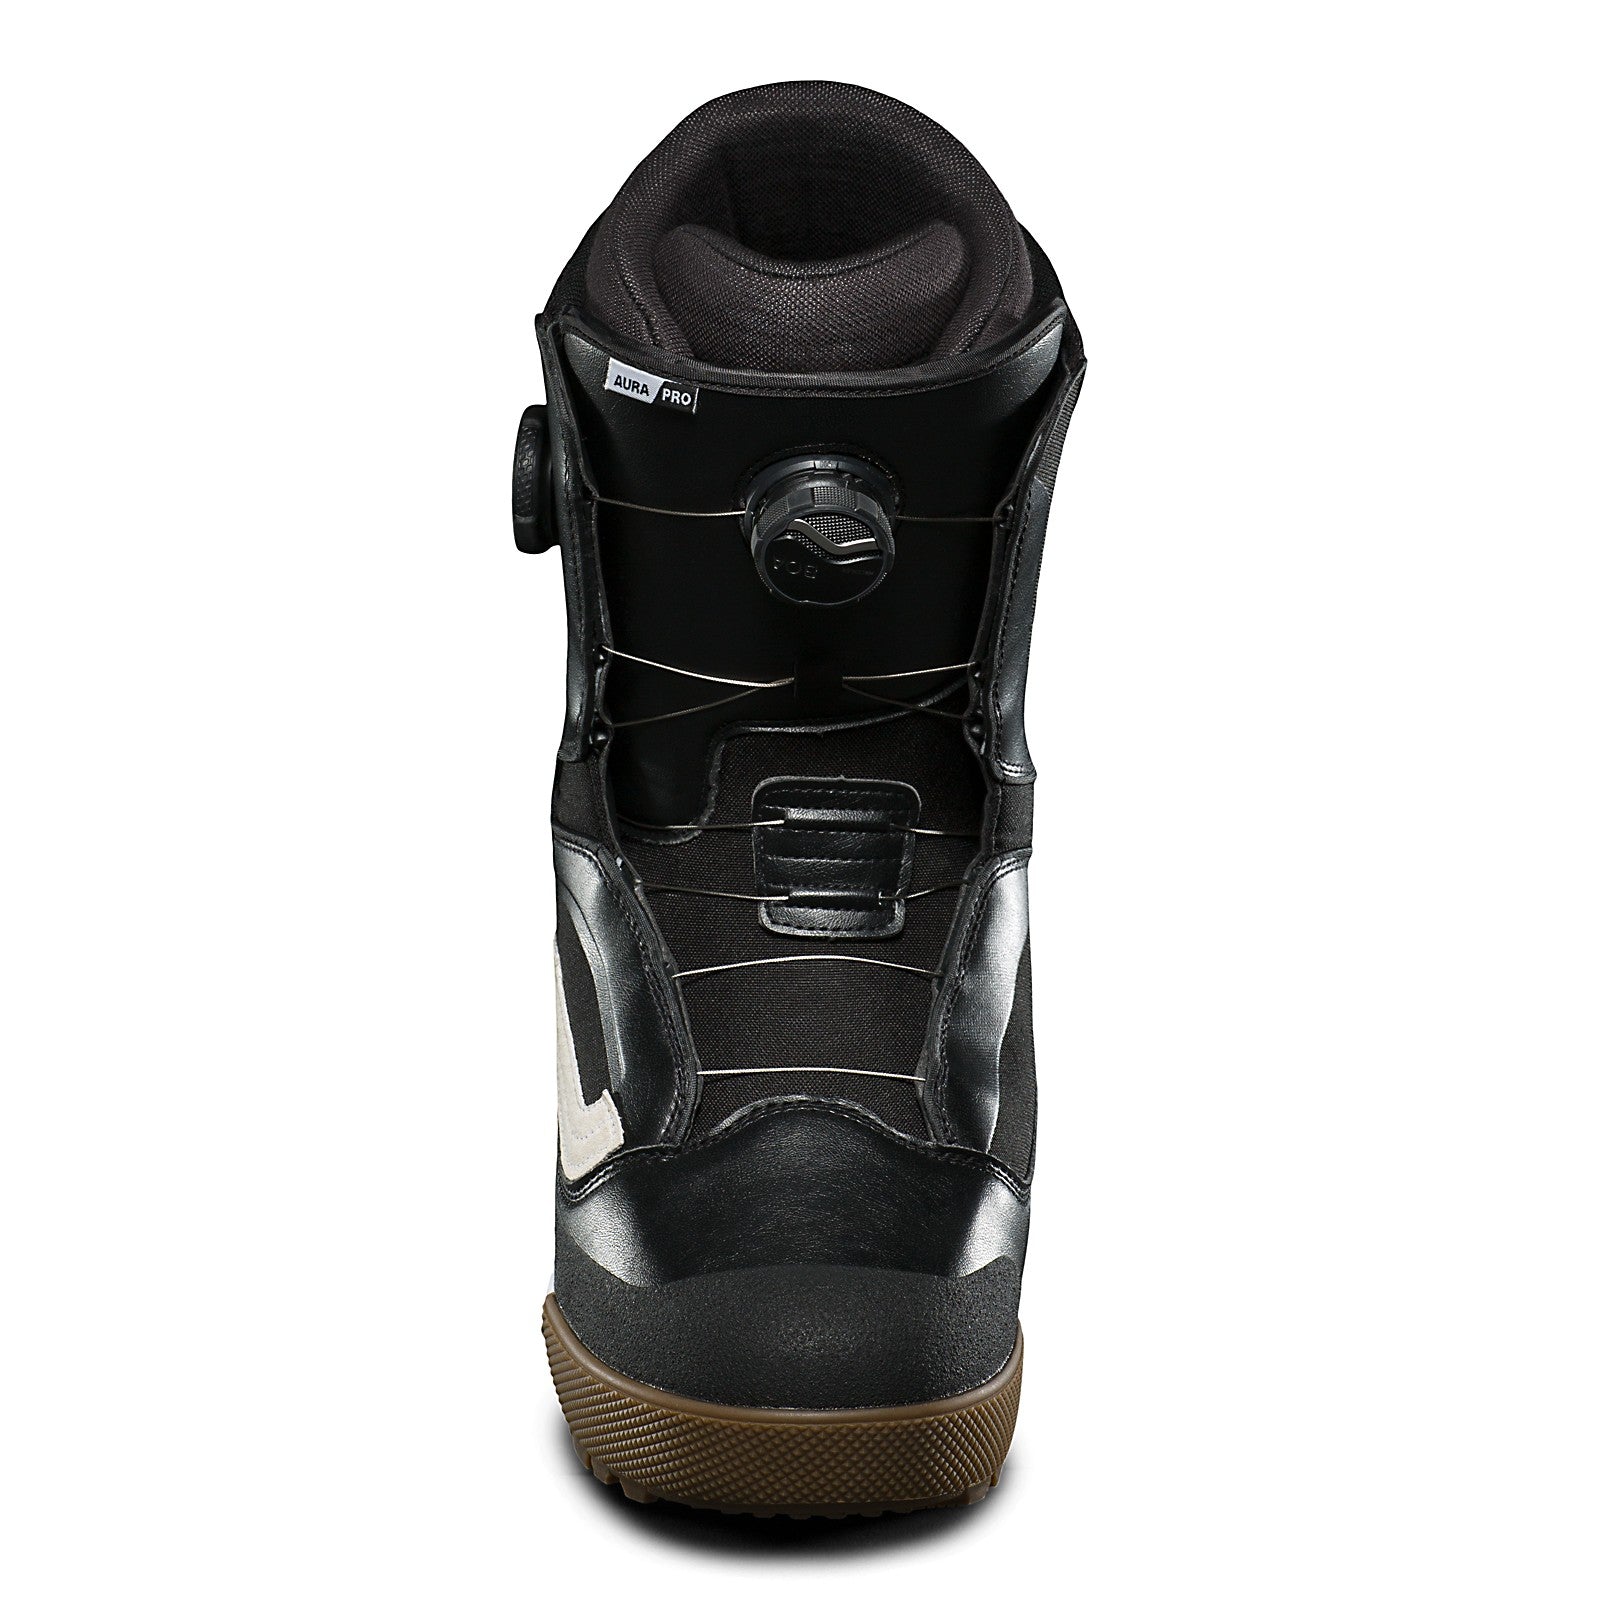 Vans Aura Pro 2023 Snowboard boots